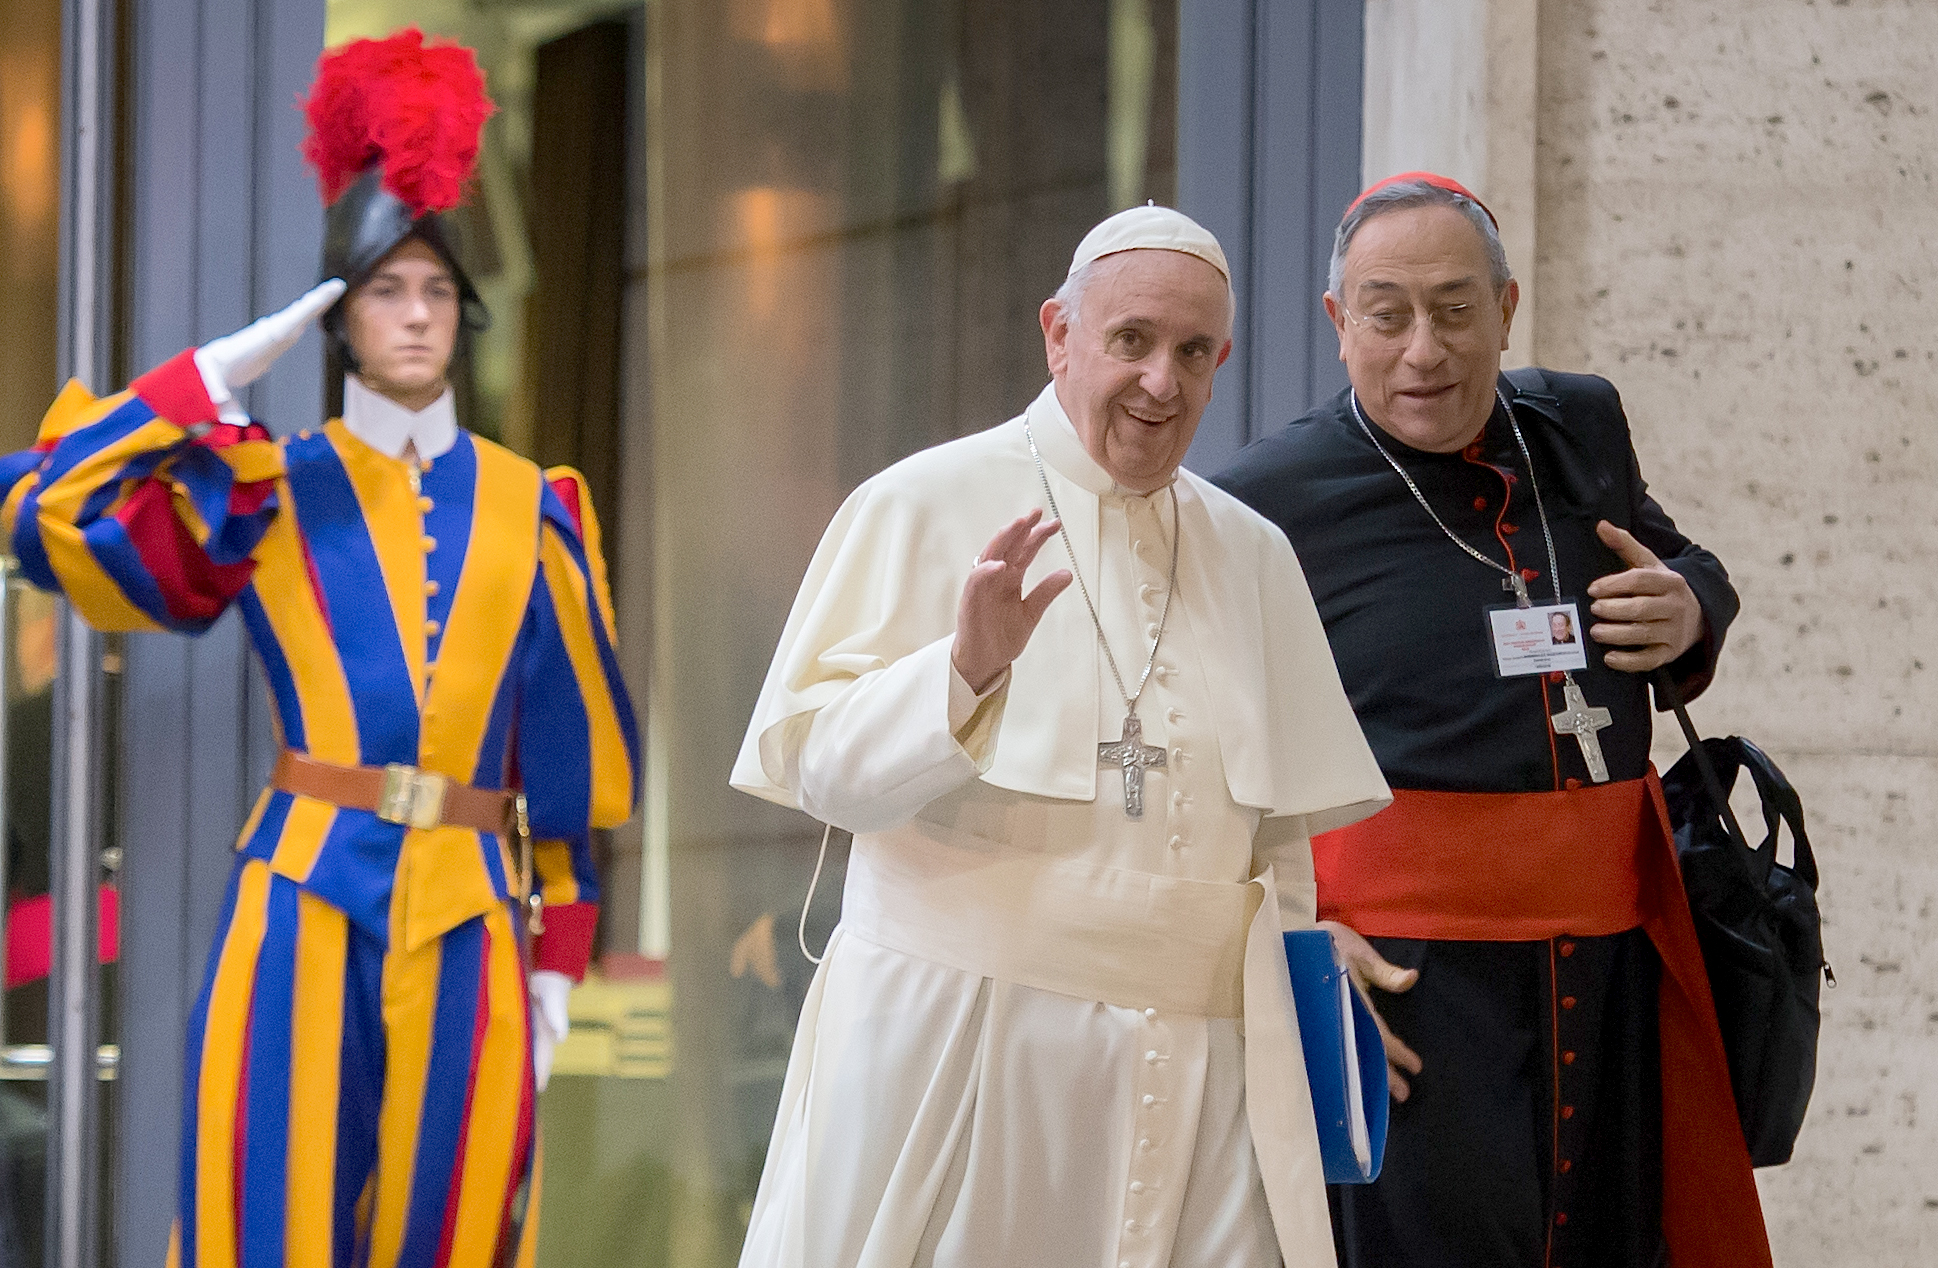 Cardinal Maradiaga with pope Francis